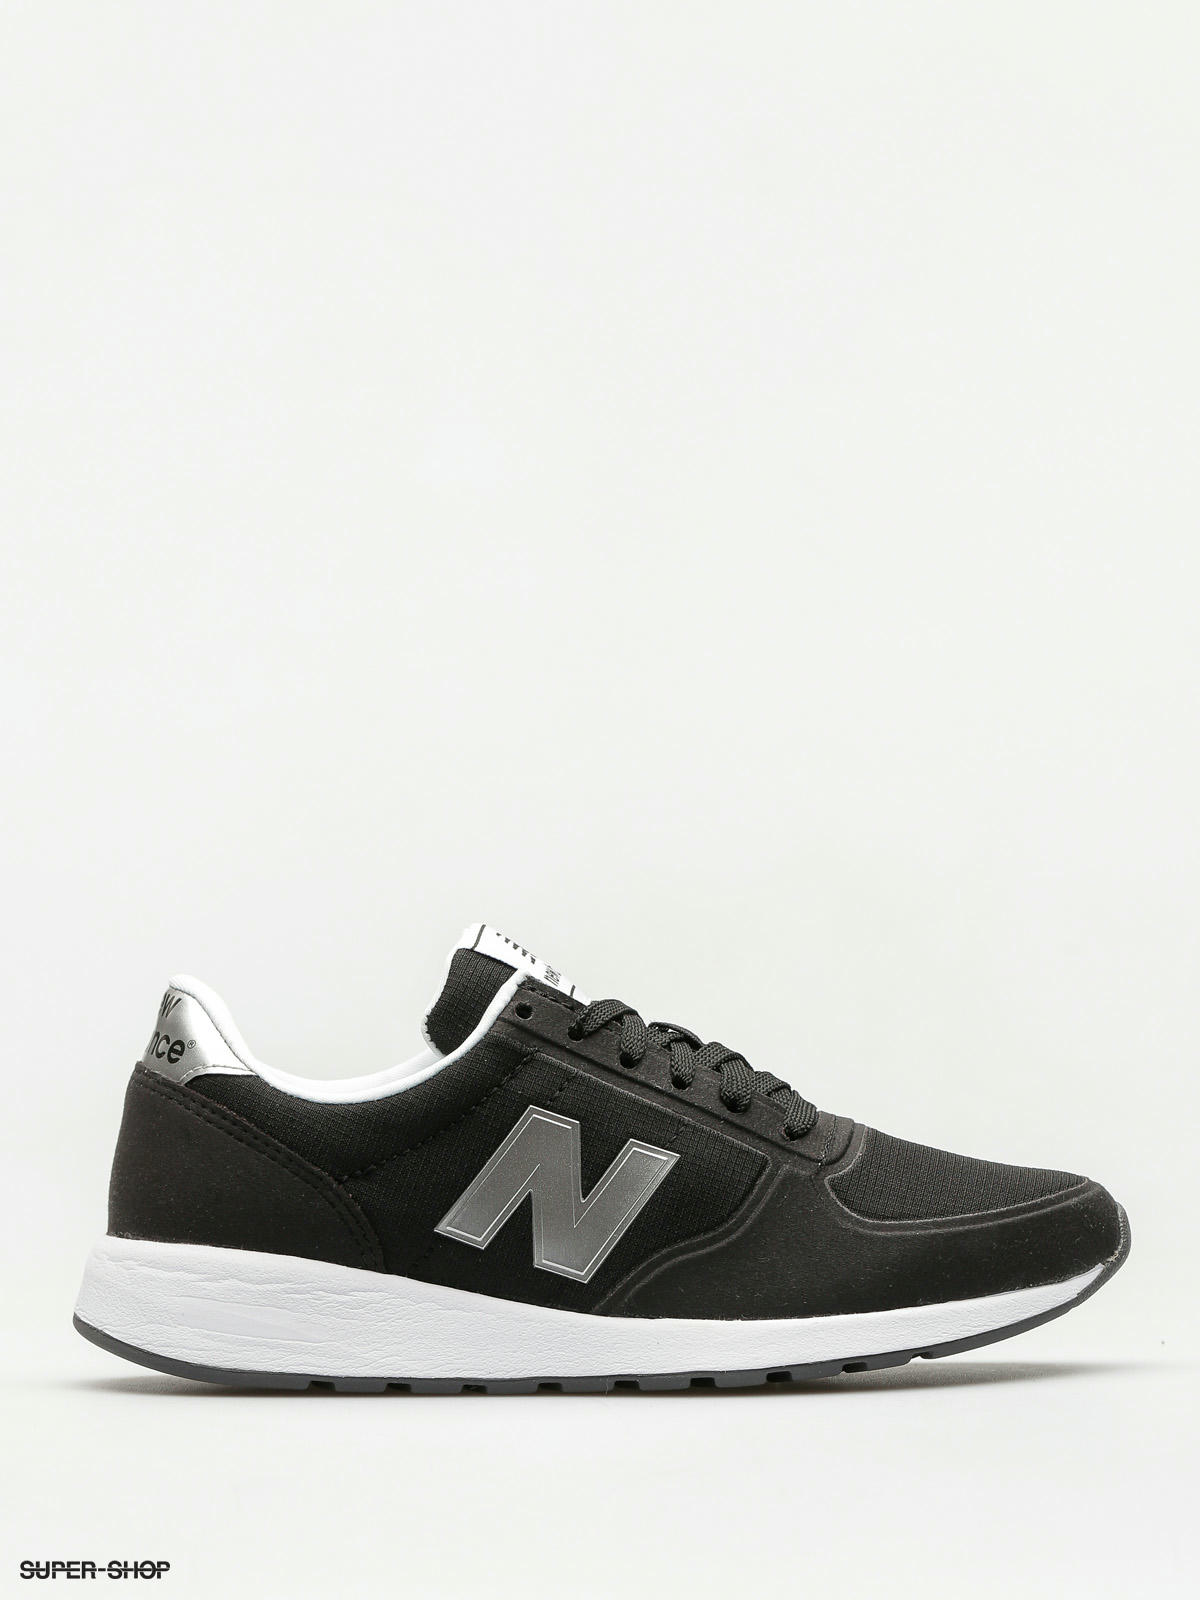 New Balance Shoes 215 Wmn (black)